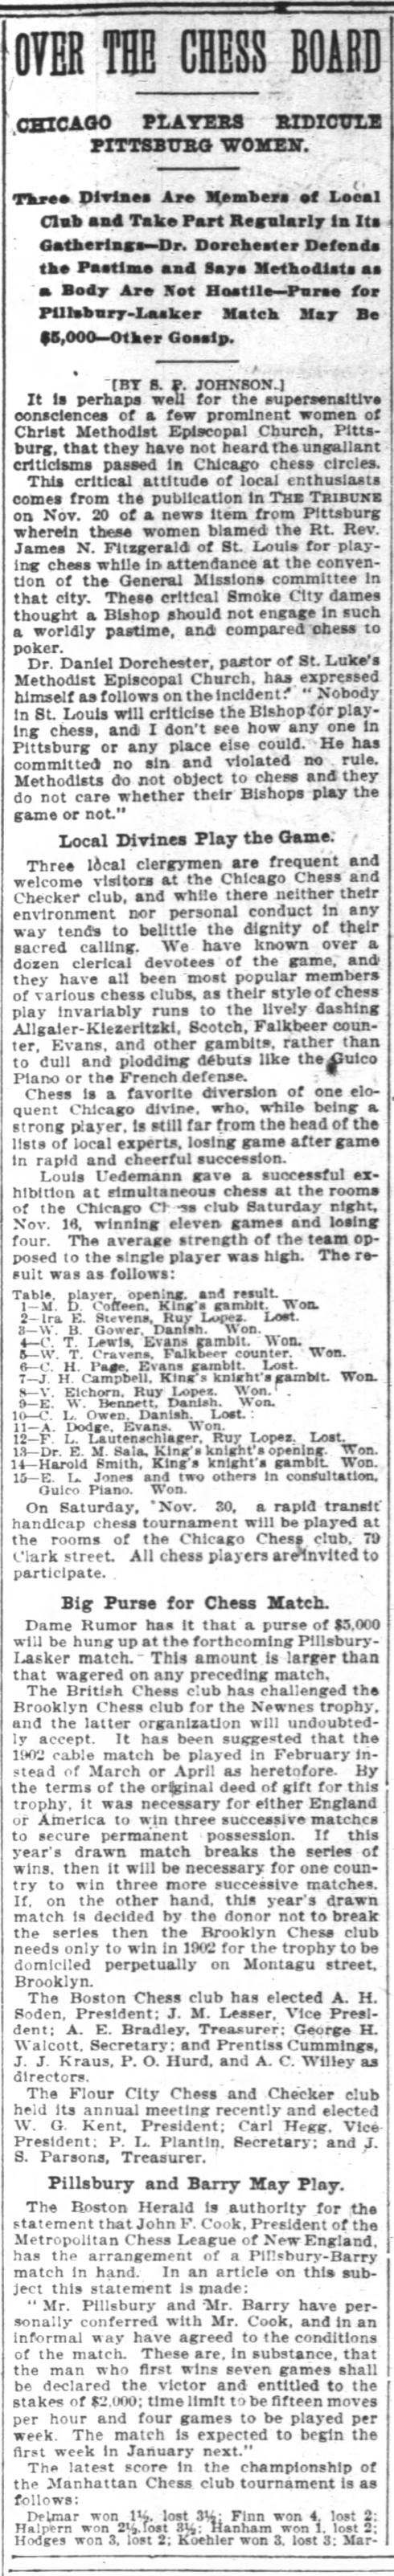 1901.11.24-01 Chicago Tribune.jpg